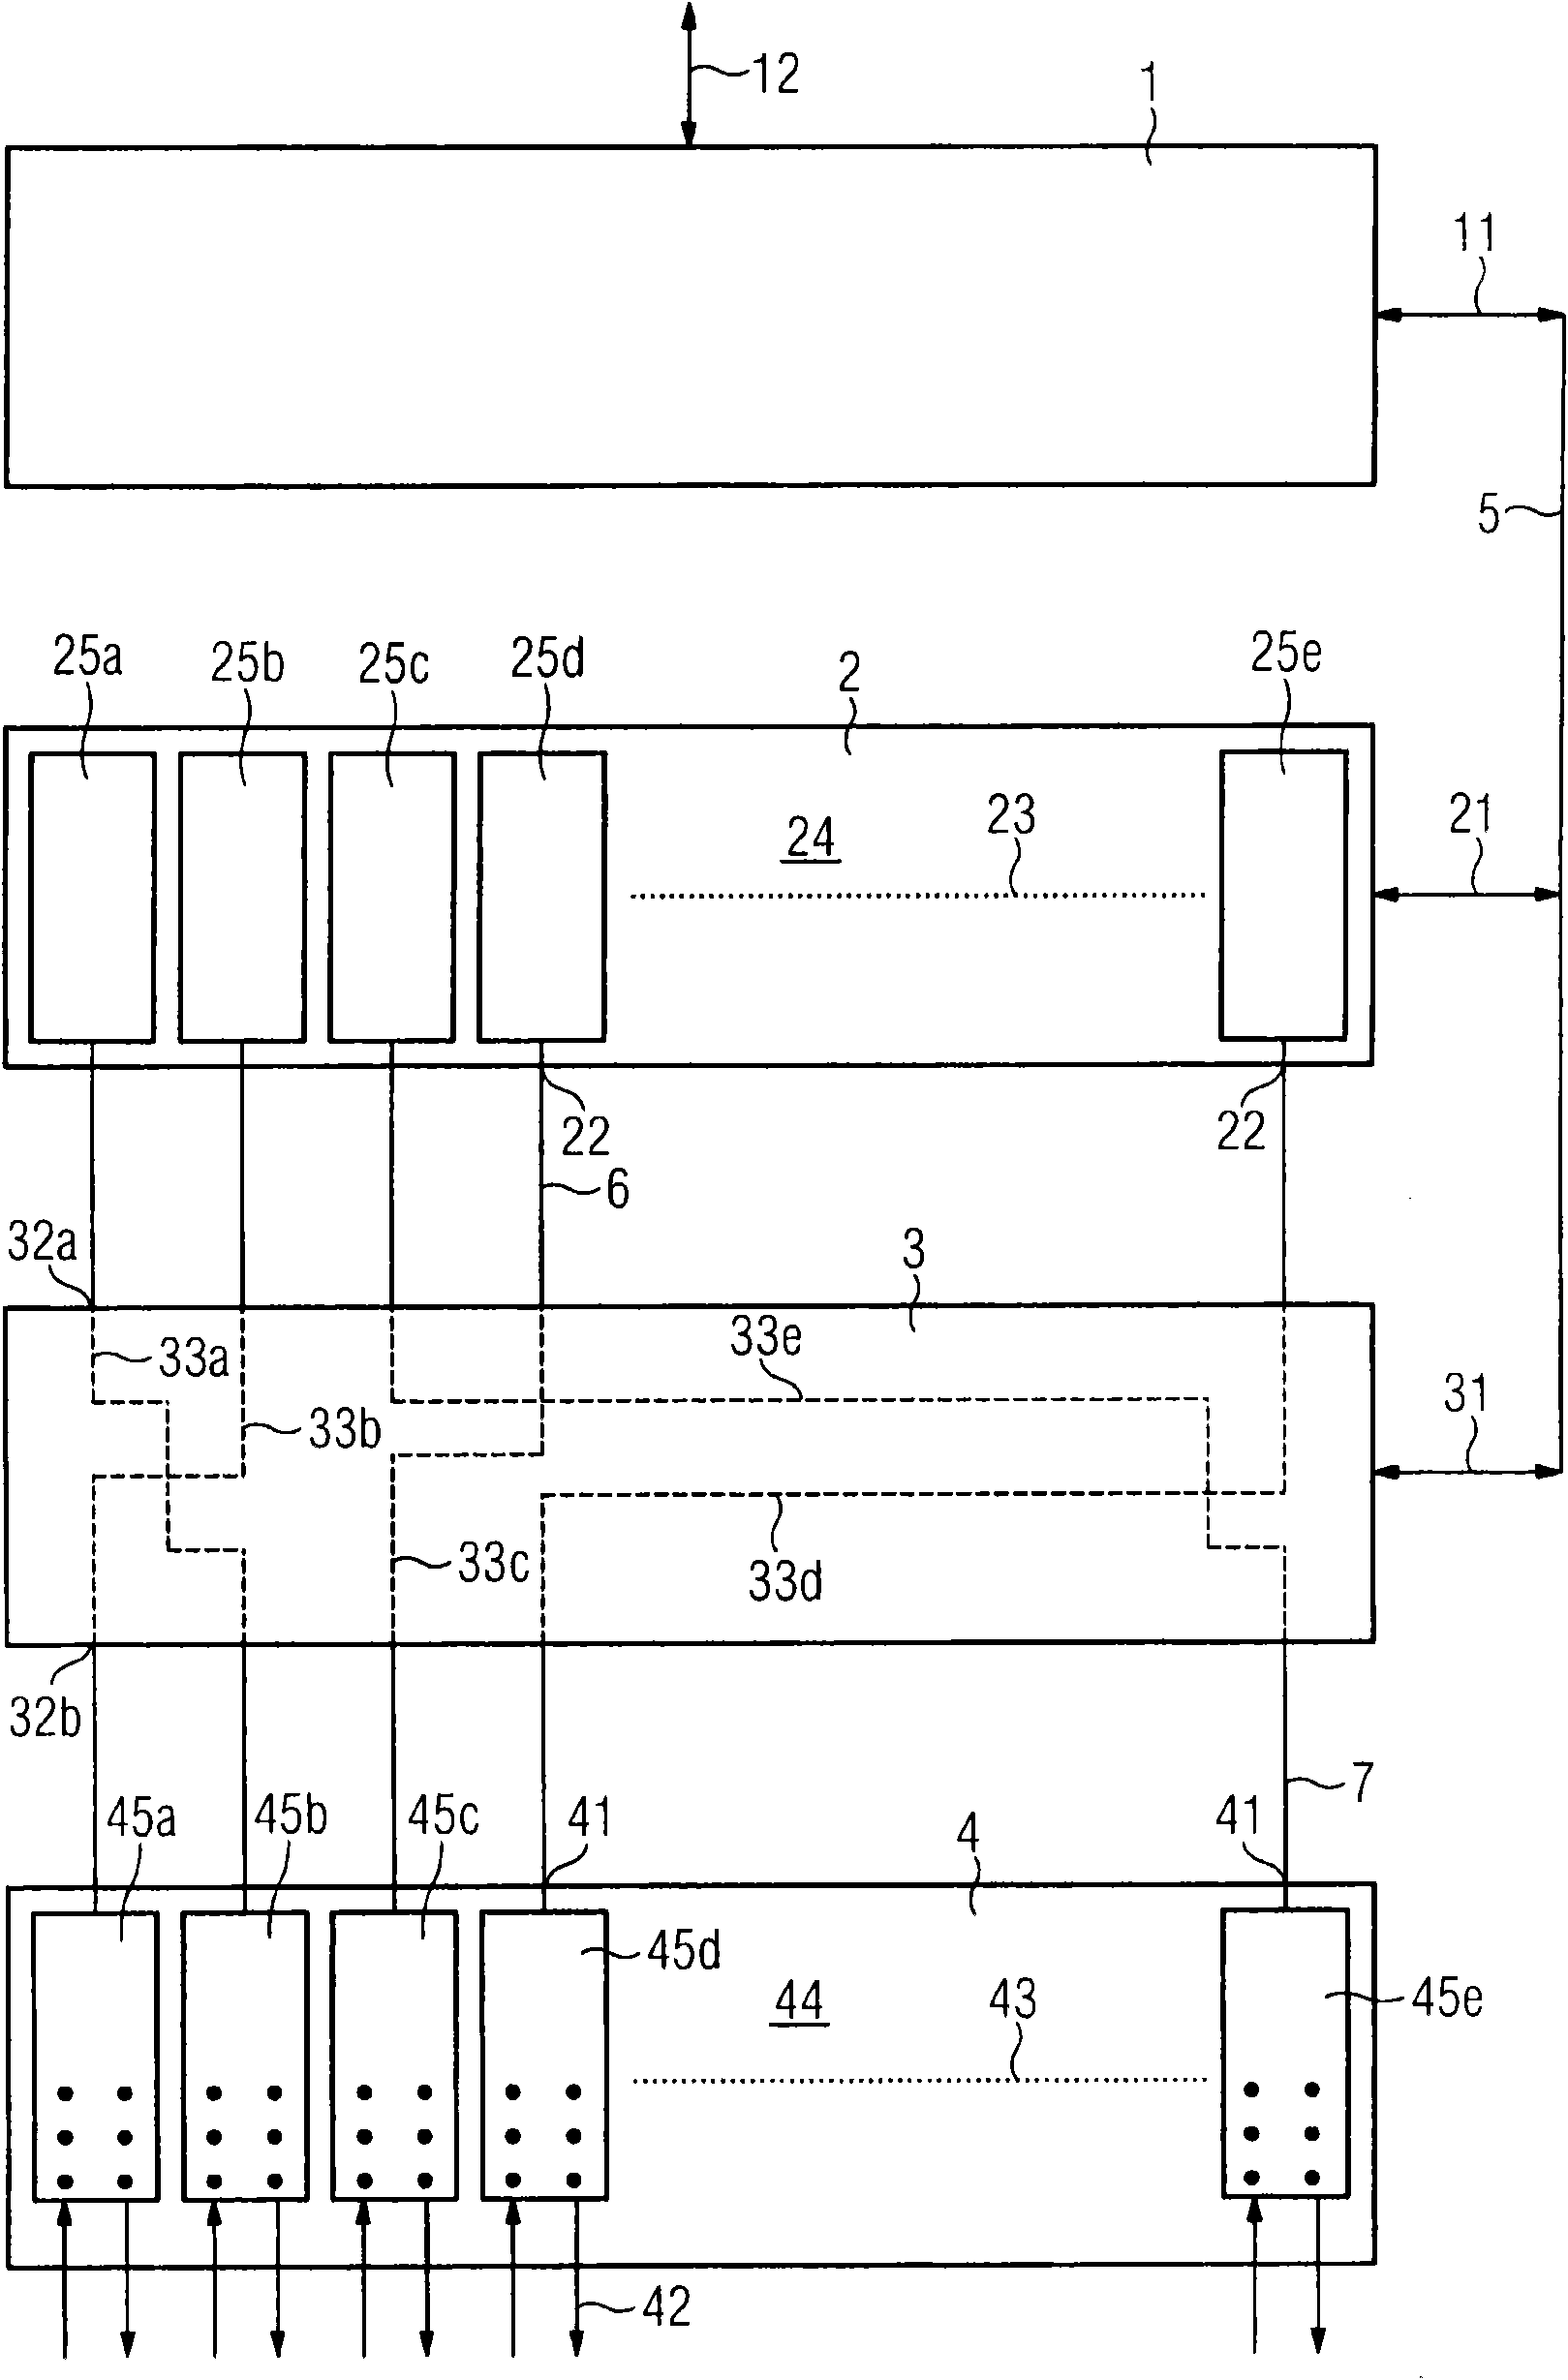 Automation system having a programmable matrix module